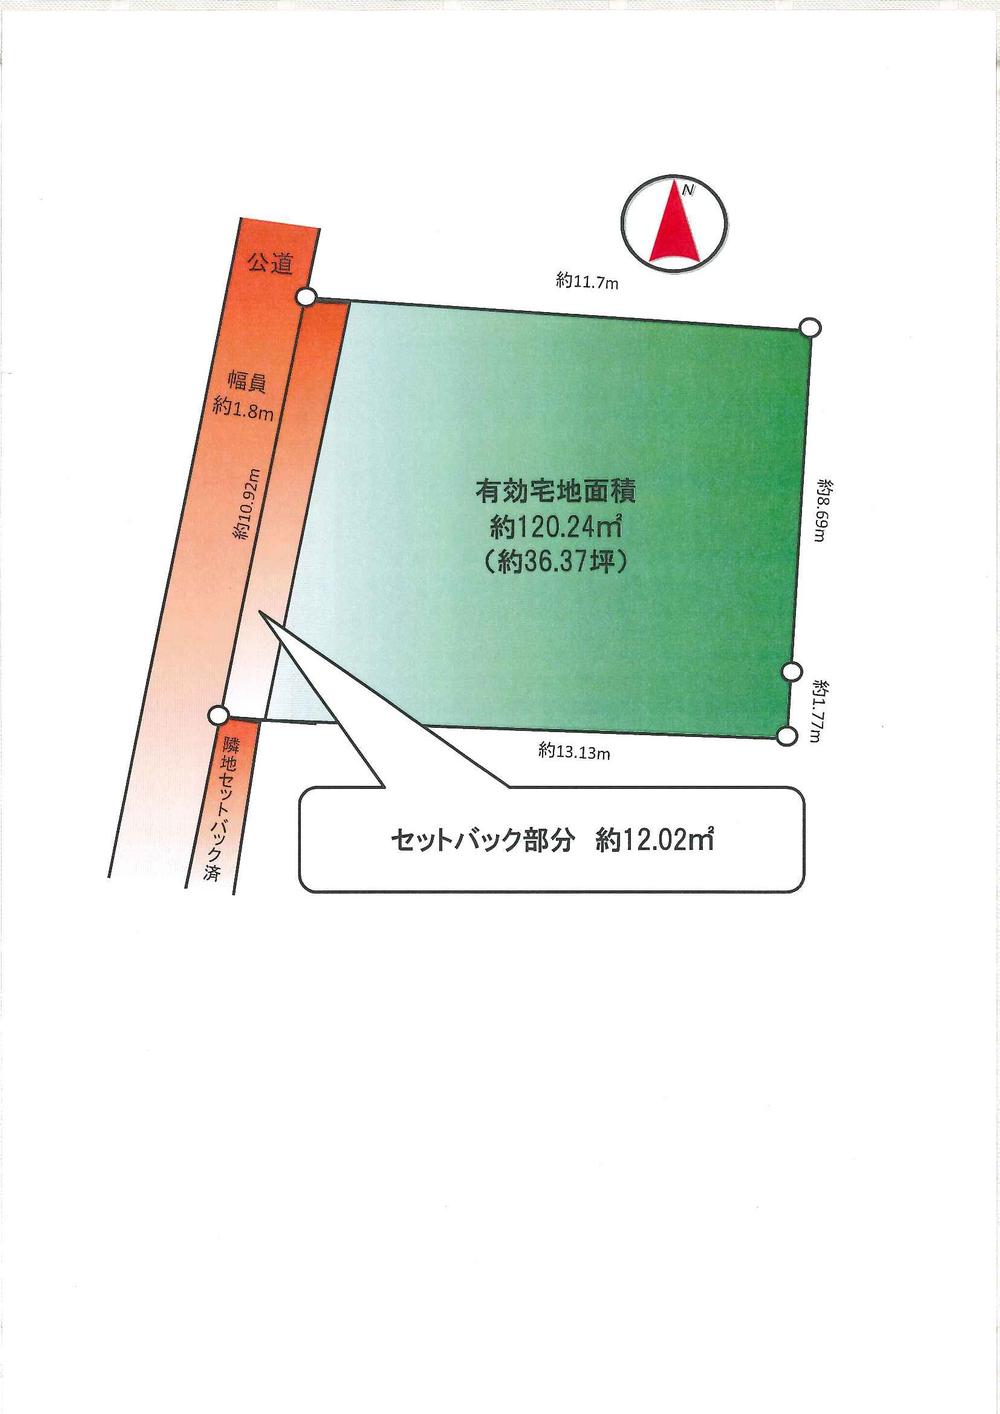 Compartment figure. Land price 16.8 million yen, Land area 132.26 sq m